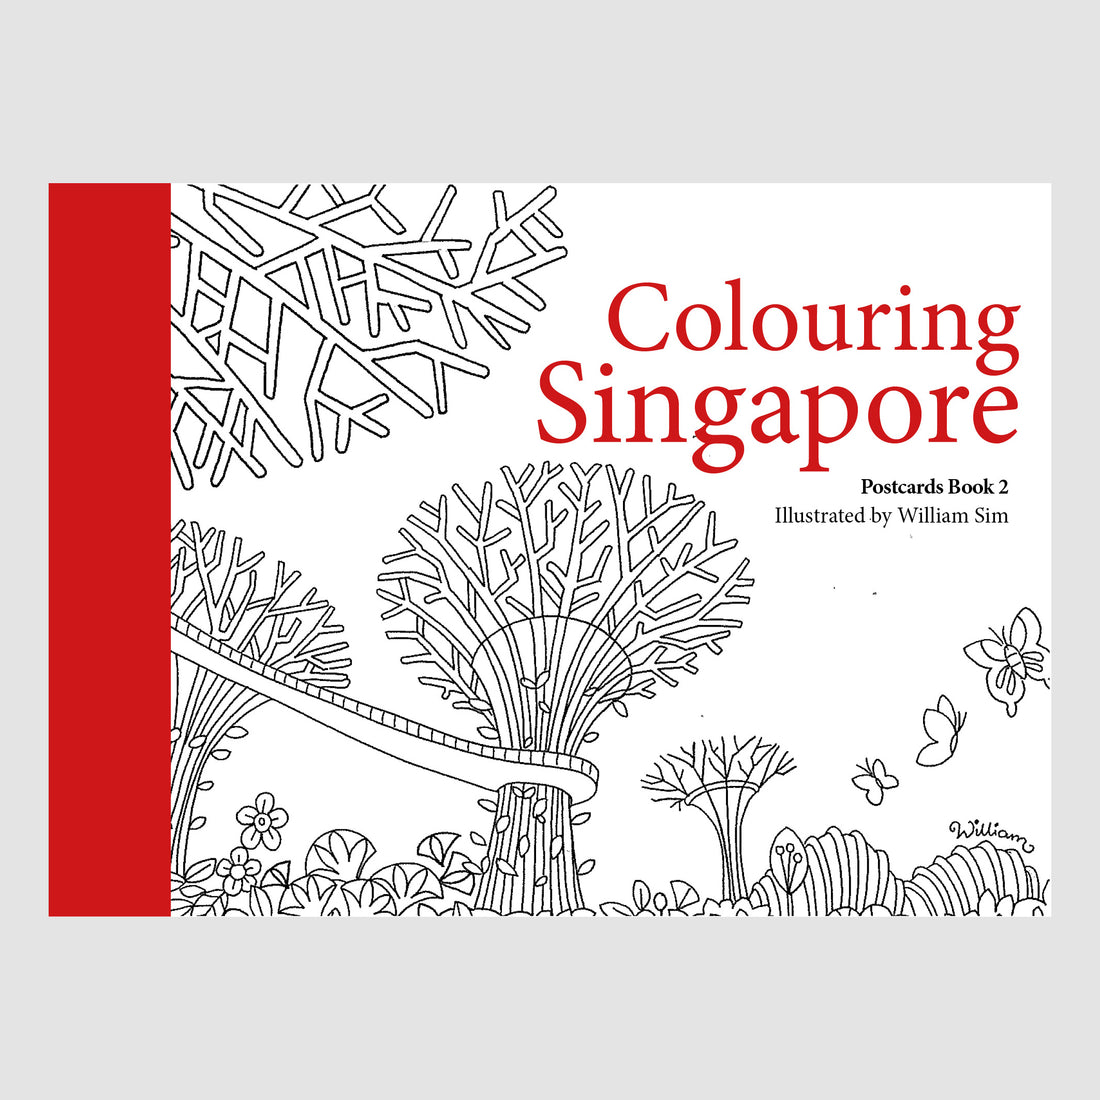 Colouring Singapore: Postcards Book 2